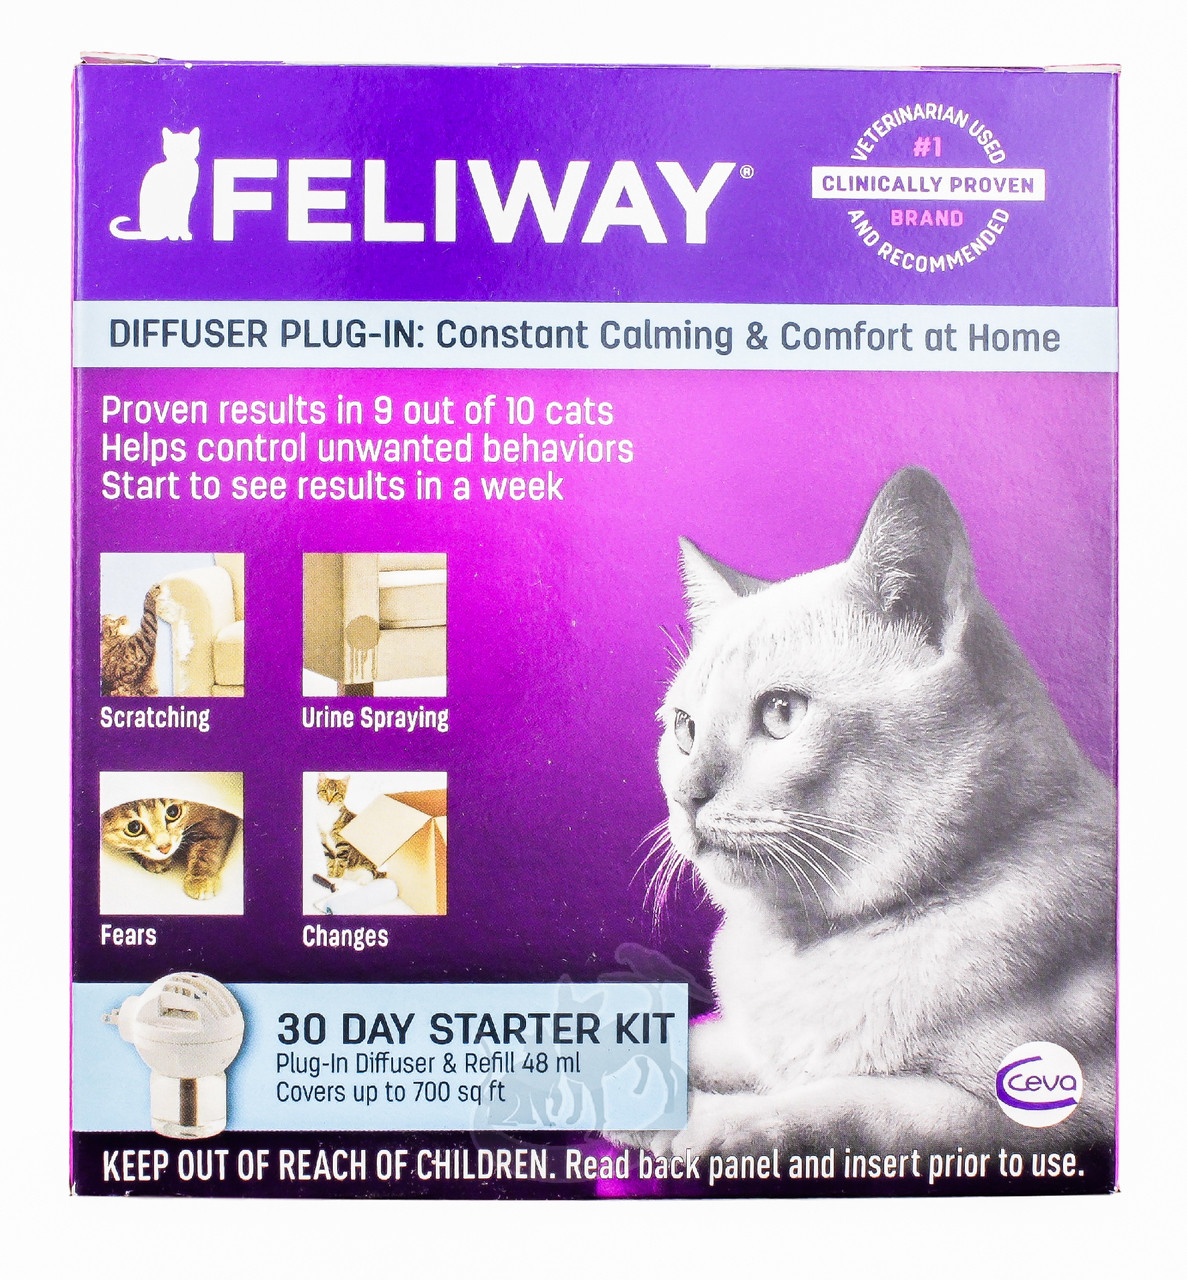  FELIWAY Classic Cat Calming Pheromone, 30 Day Refill